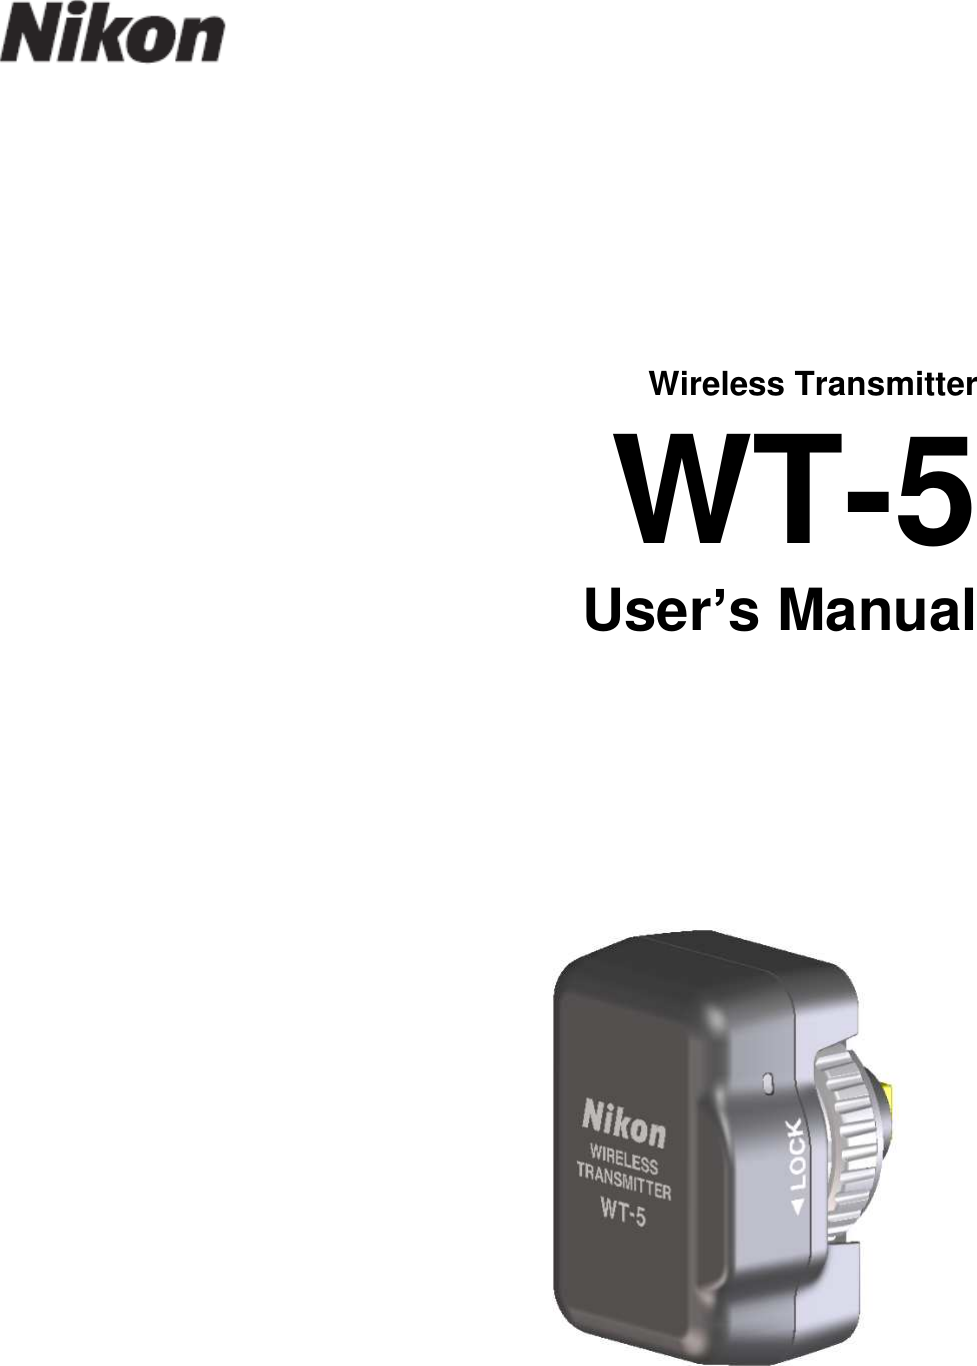          Wireless Transmitter WT-5 User’s Manual